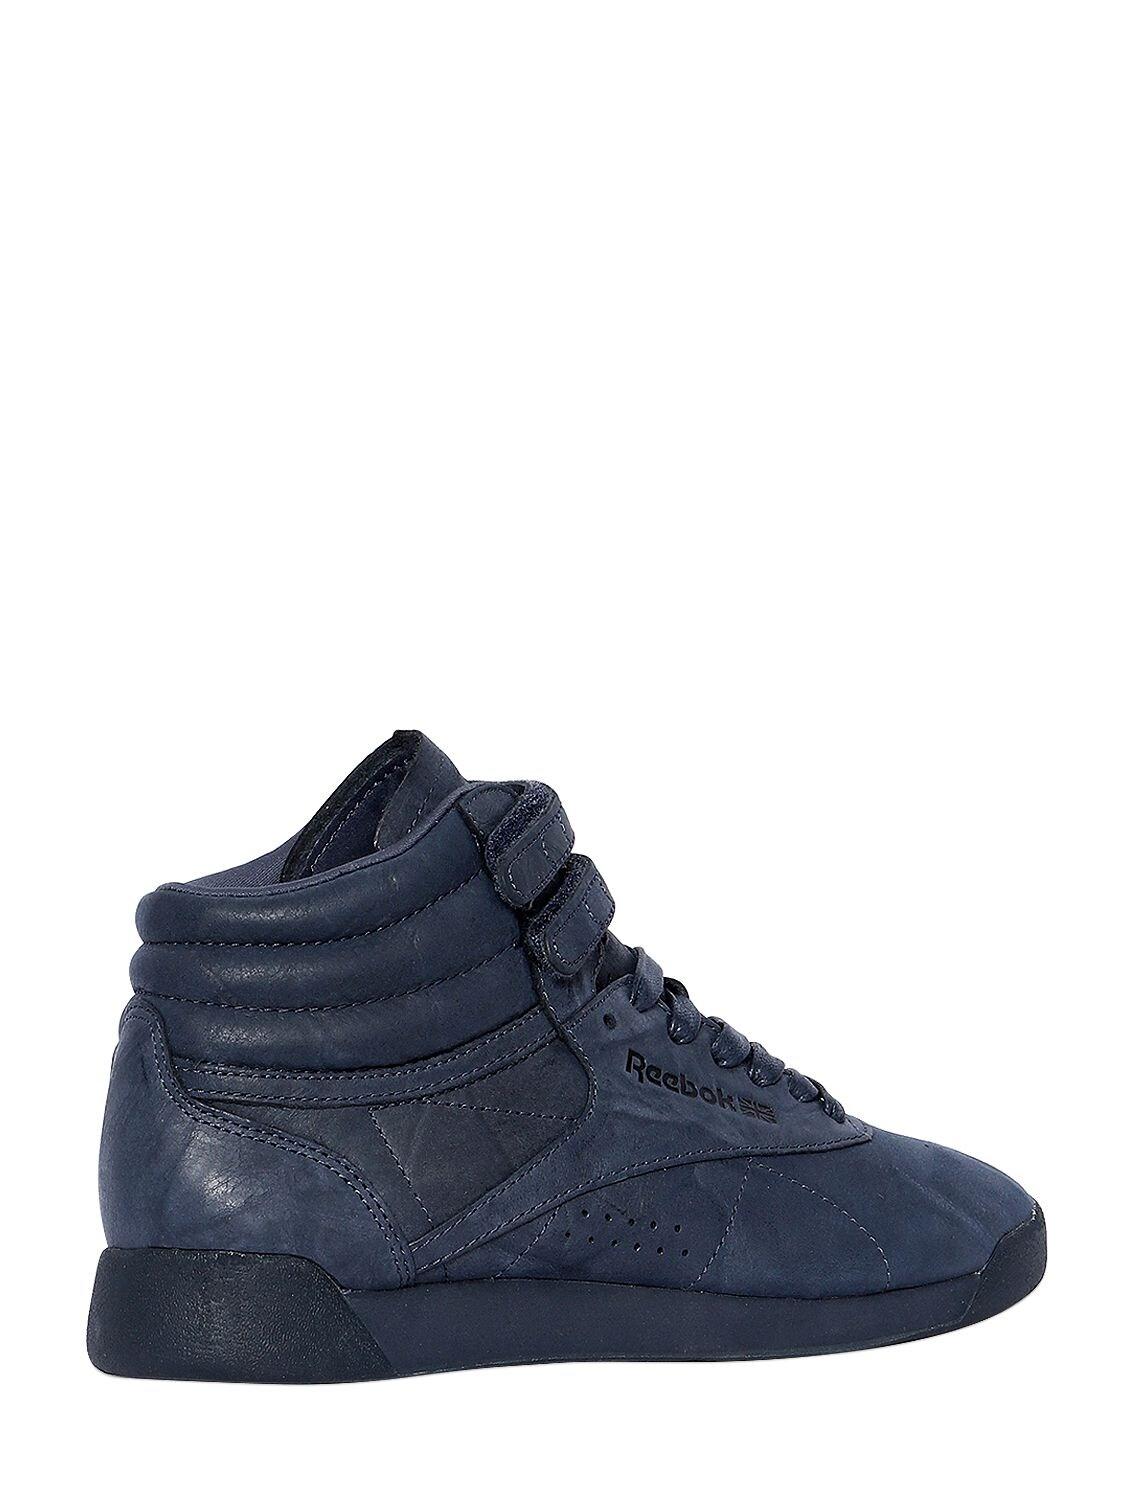 Reebok Freestyle Nubuck High Top Sneakers in Navy (Blue) | Lyst